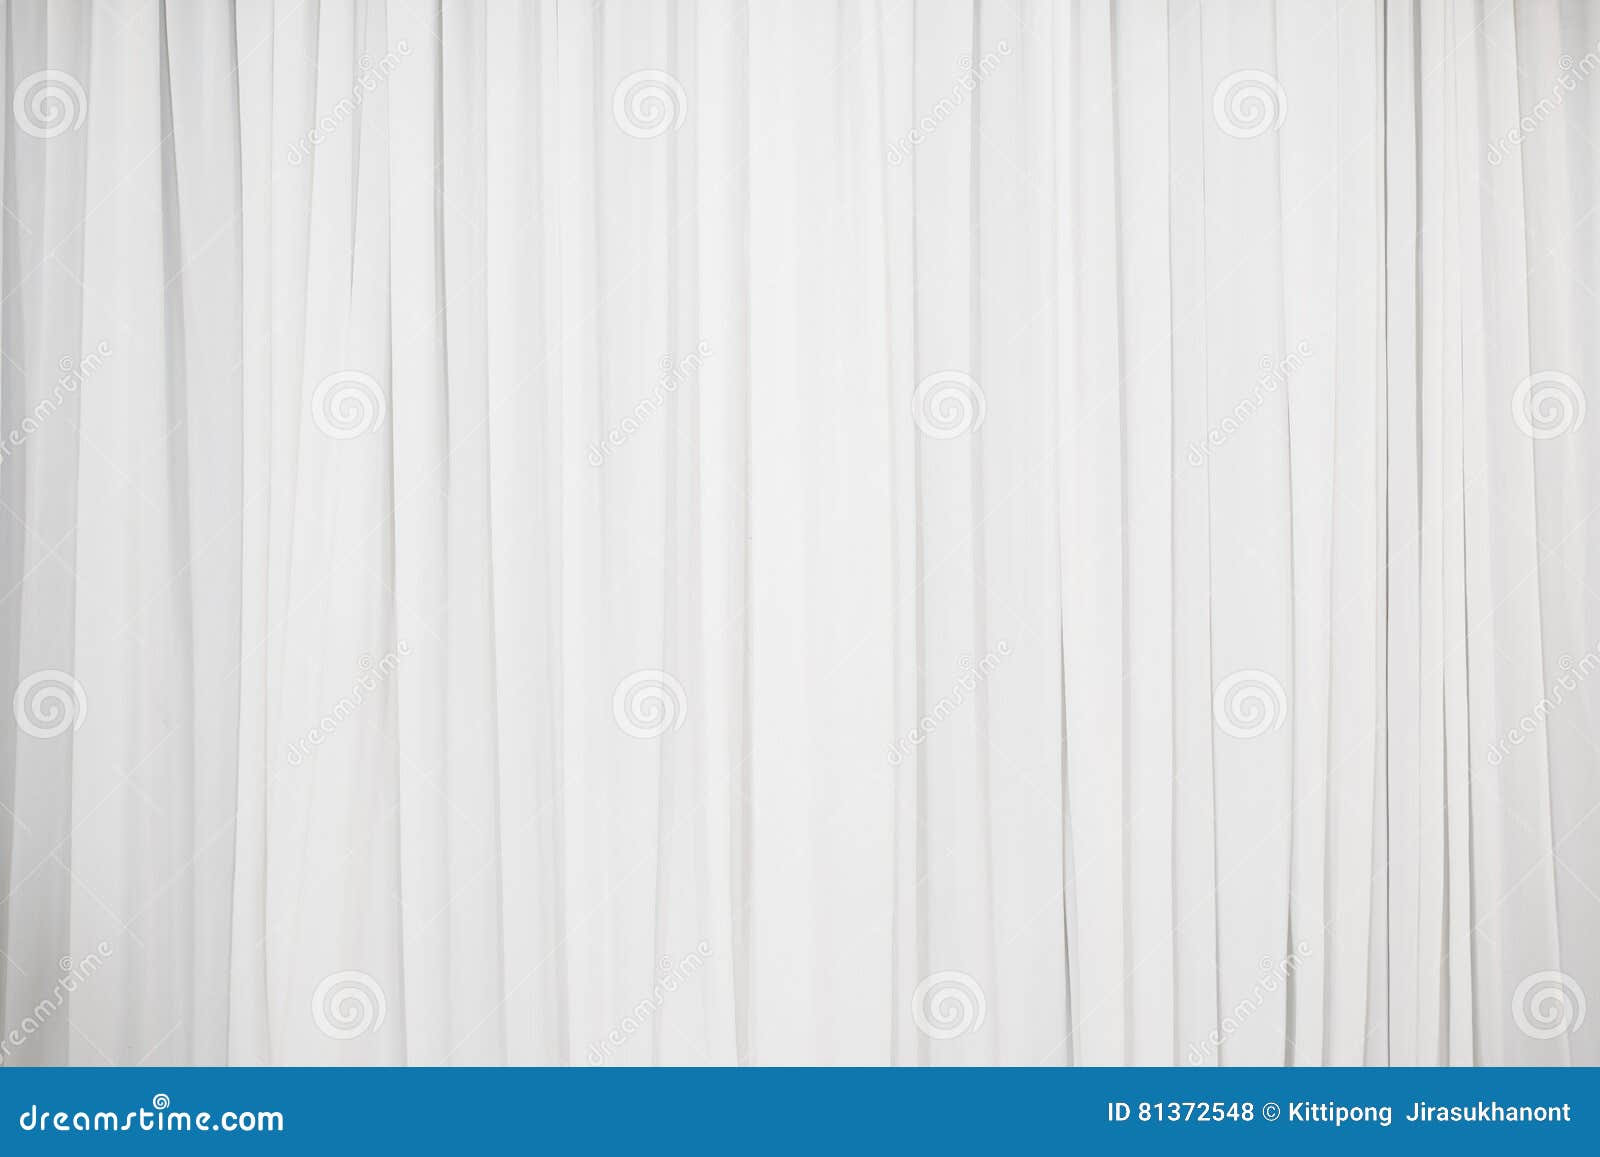 white pleat cloth background